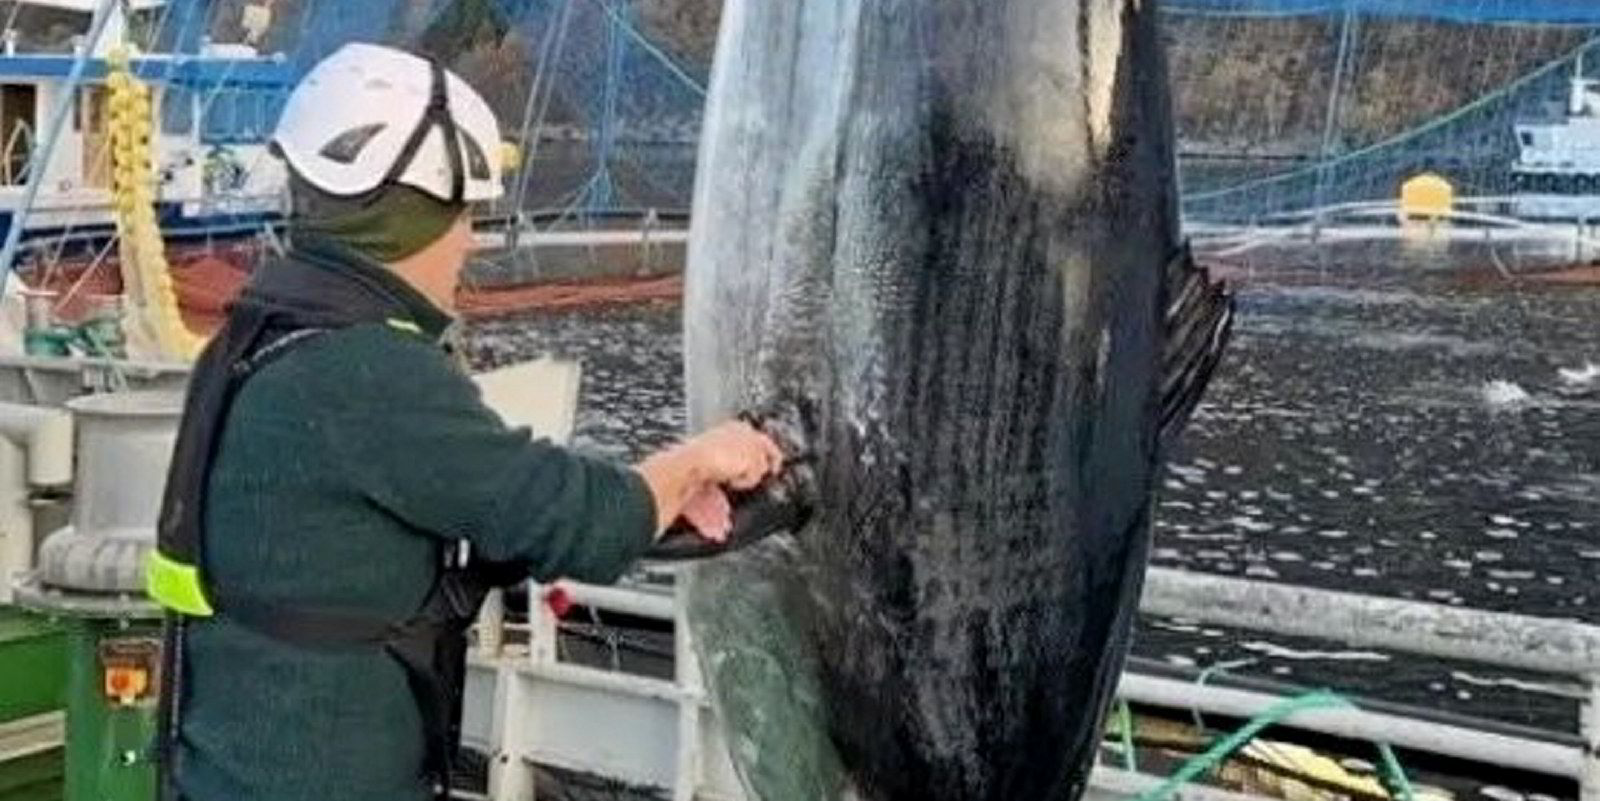 Giant tuna breaks into Norwegian salmon farm